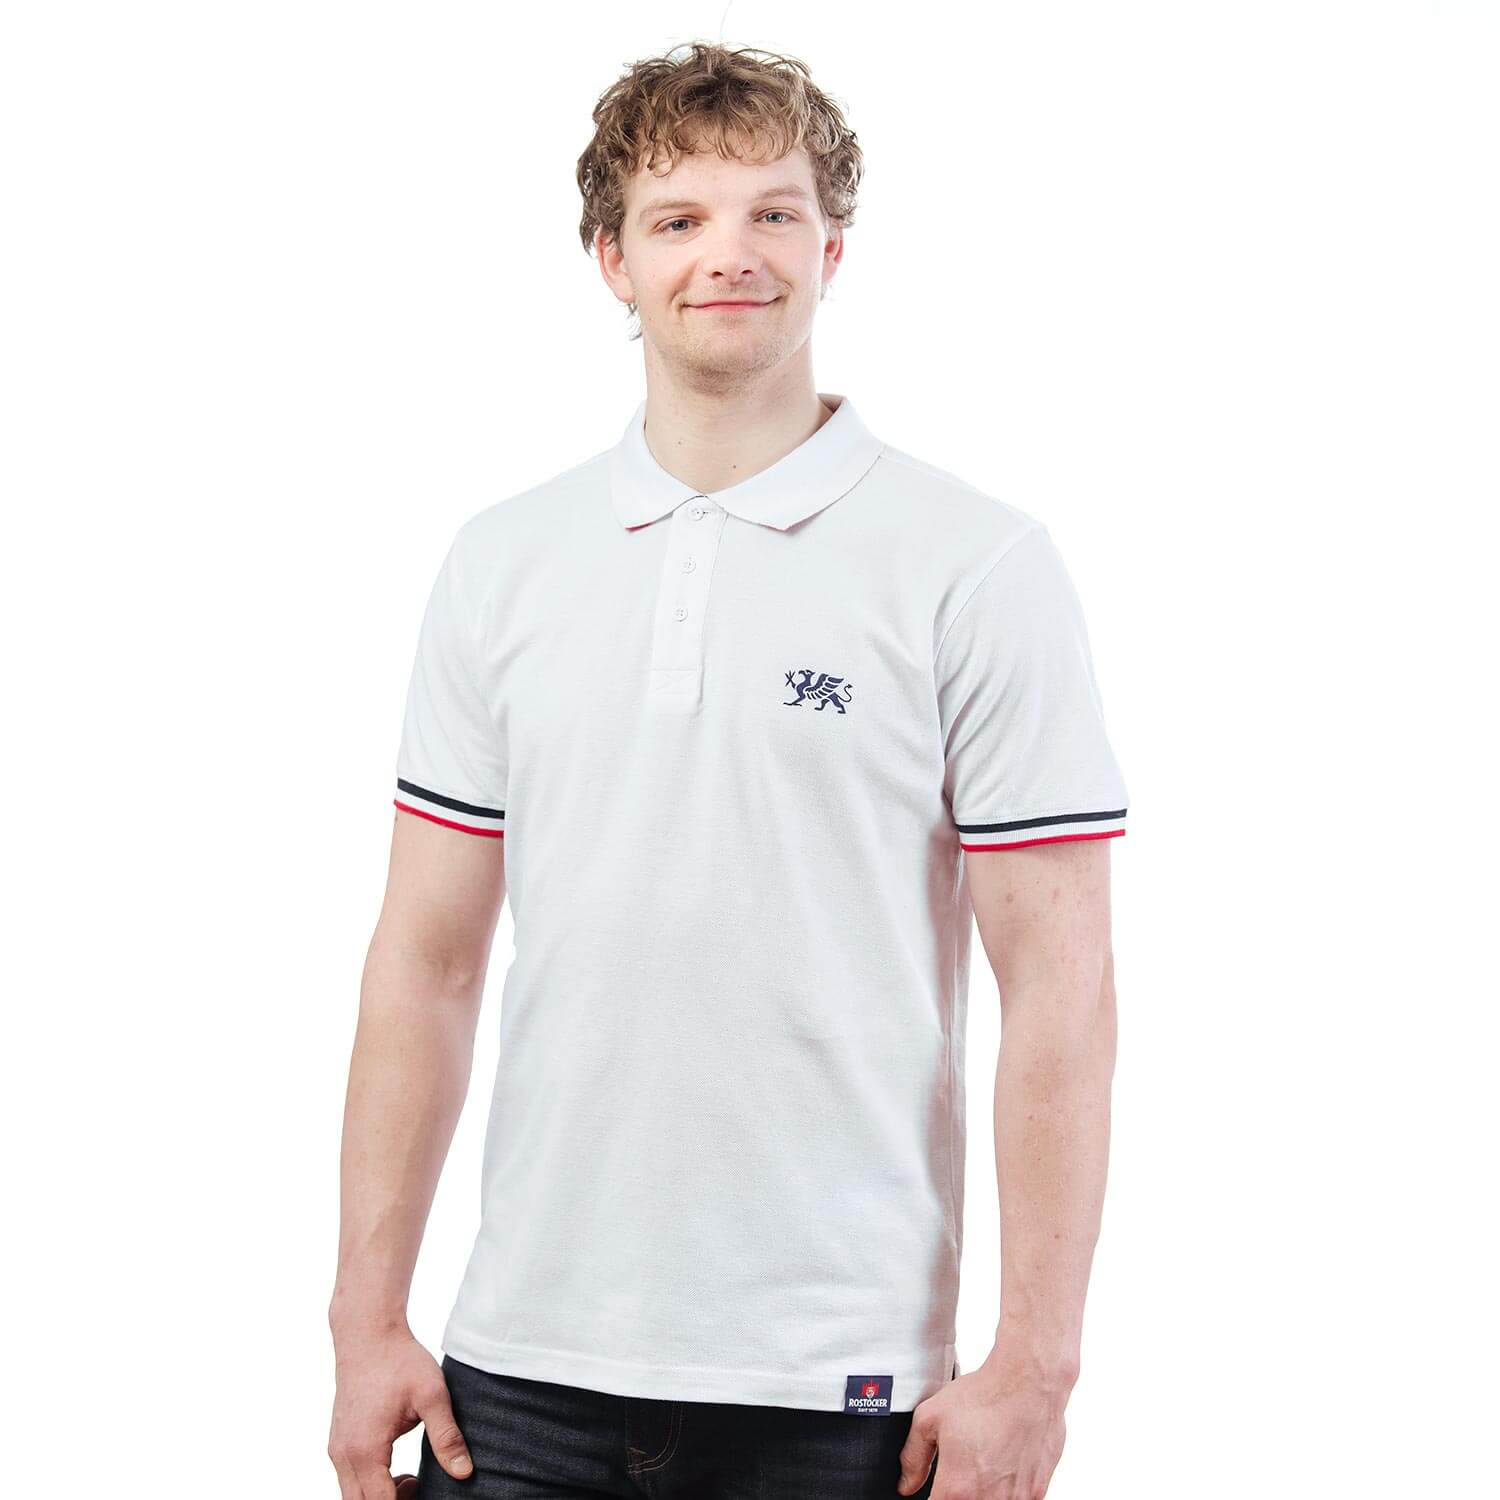 Rostocker Polo-Shirt, weiß, Gr. L